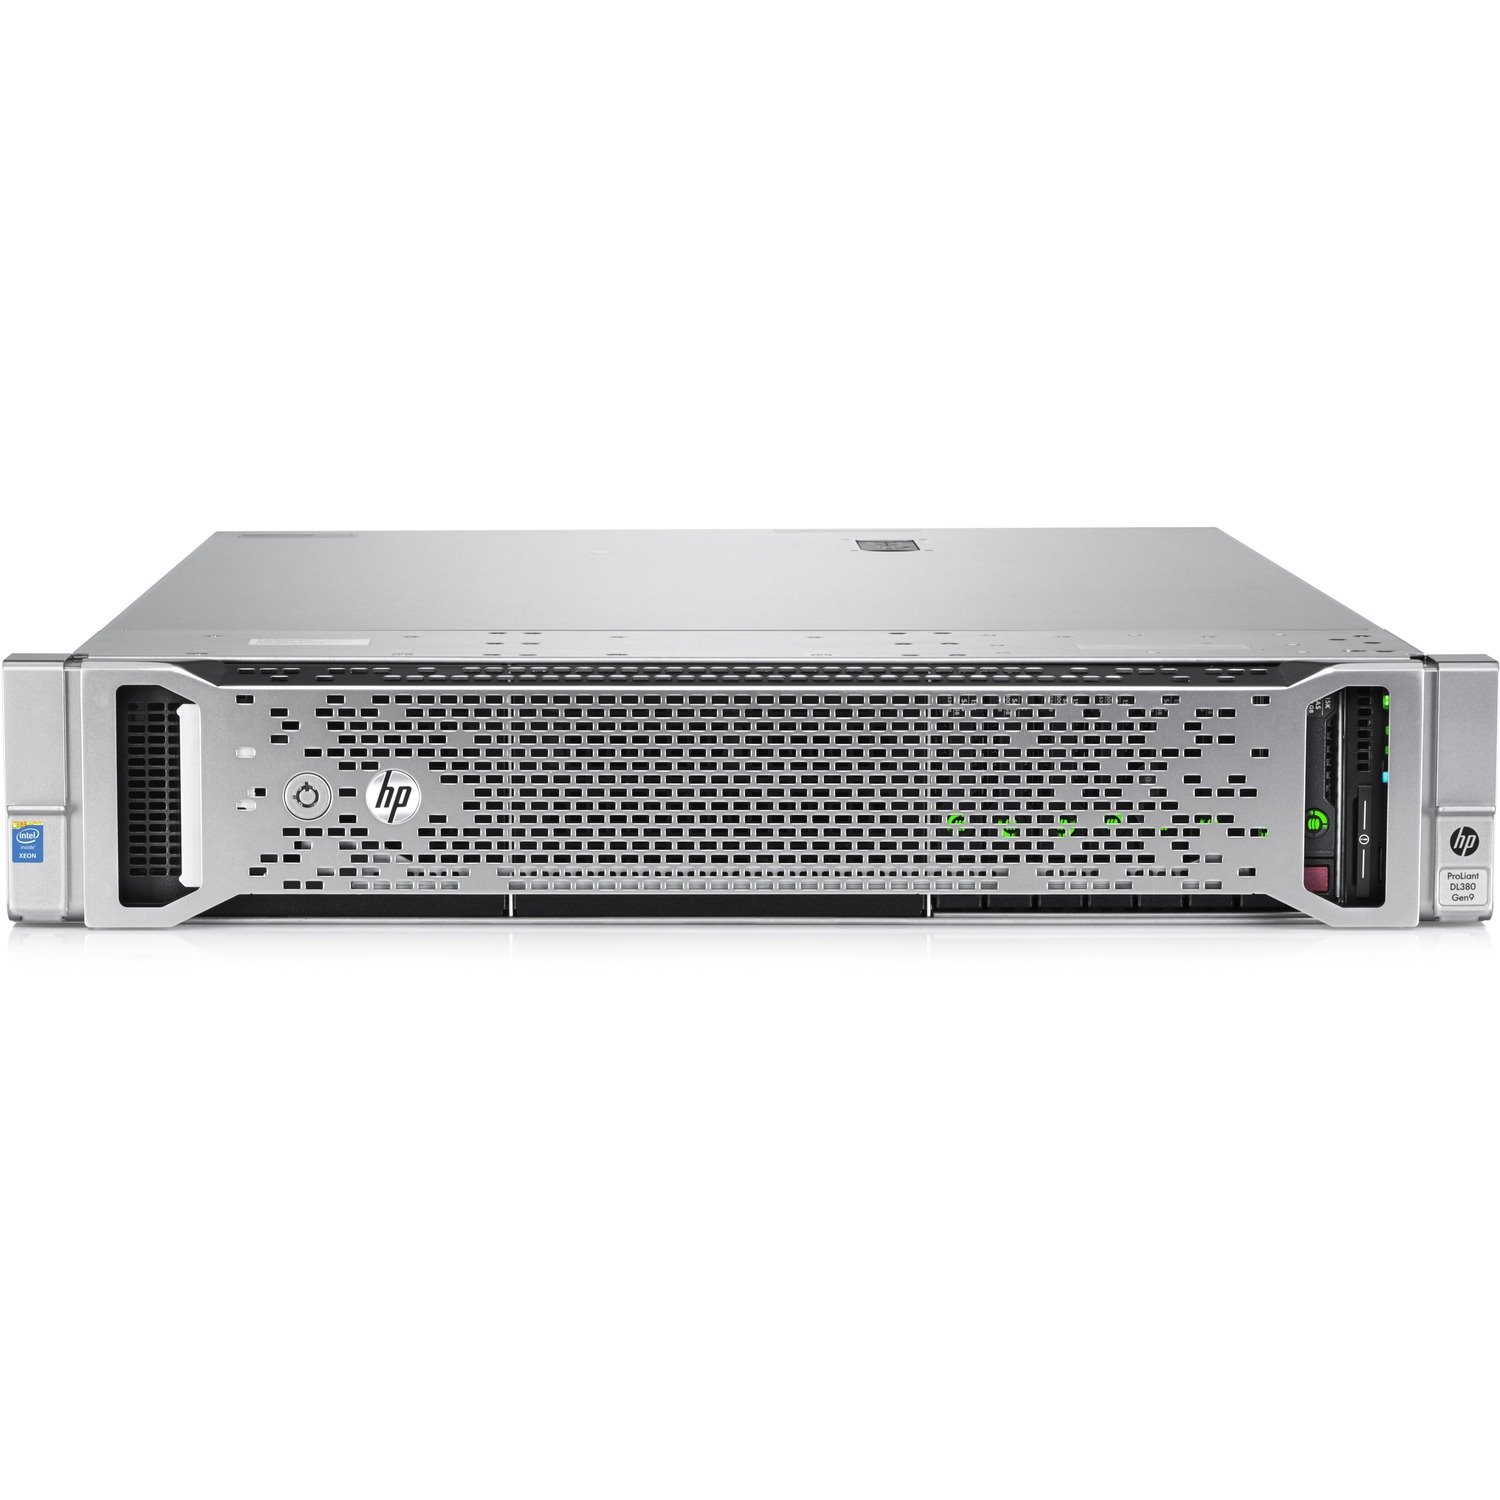 HPE ProLiant DL380 G9 2U Rack Server - 2 x Intel Xeon E5-2650 v3 2.30 GHz - 32 GB RAM - 12Gb/s SAS Controller